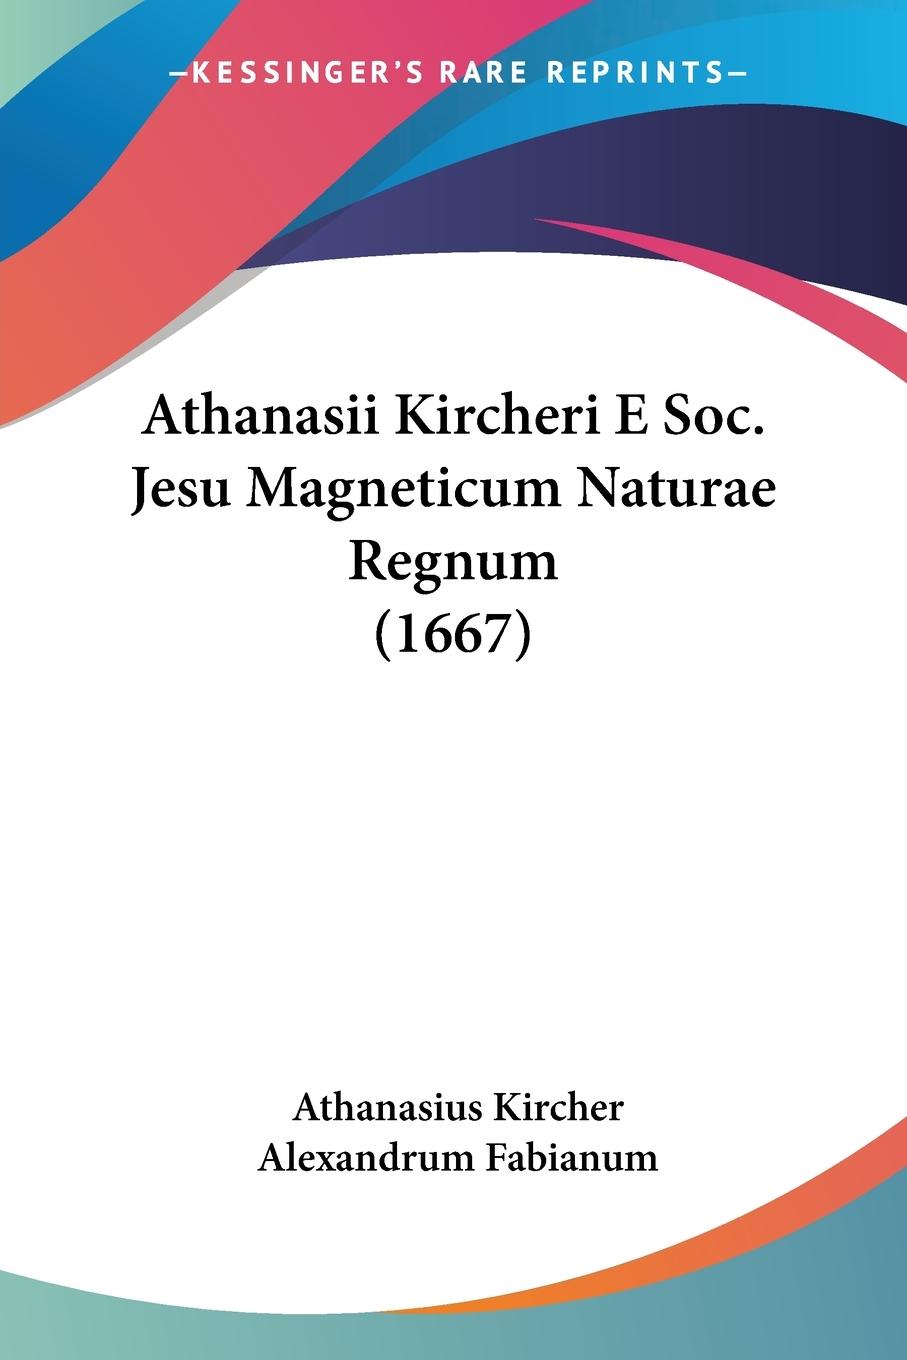 Athanasii Kircheri E Soc. Jesu Magneticum Naturae Regnum (1667) - Kircher, Athanasius Fabianum, Alexandrum